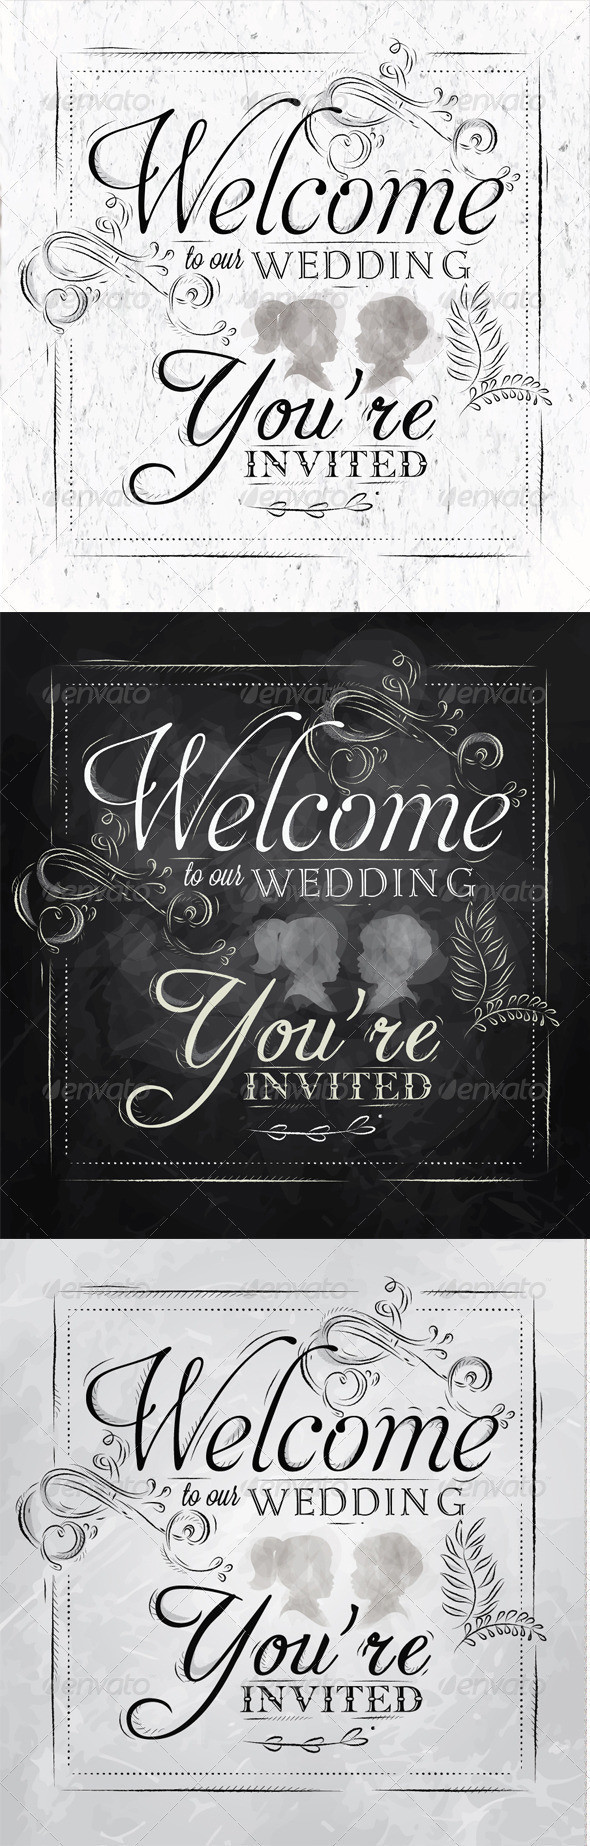 Wedding invitation 590